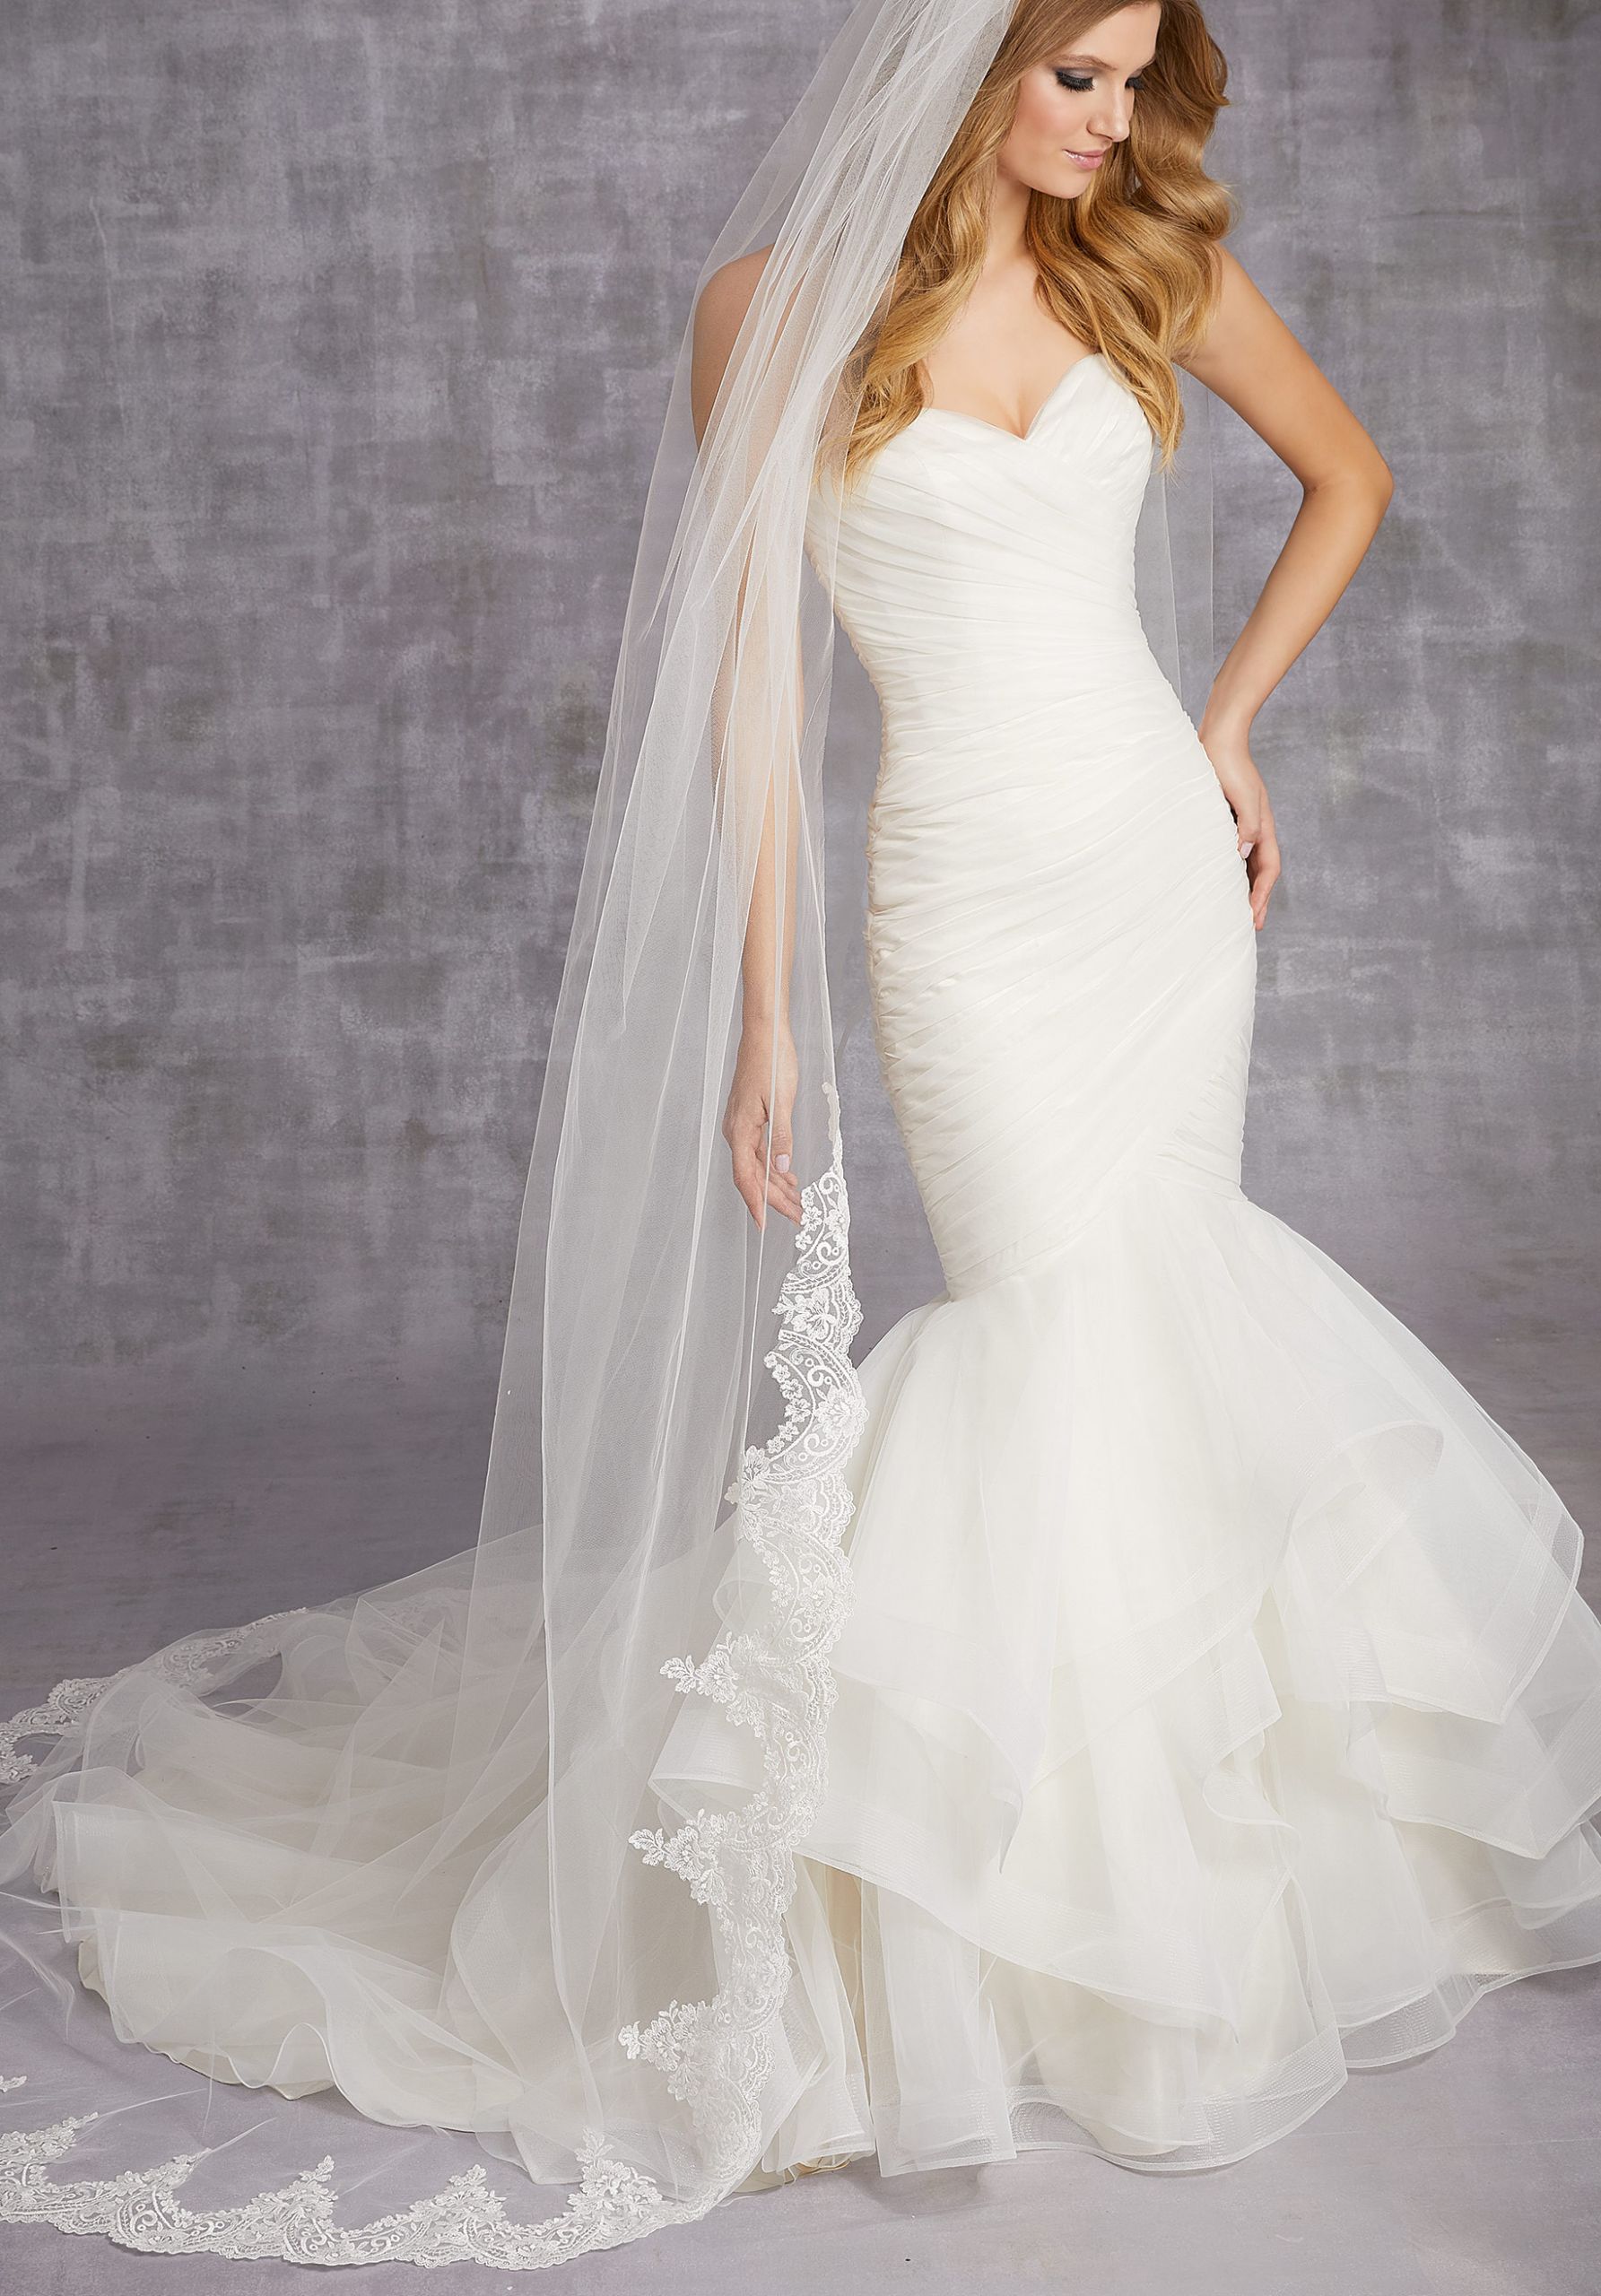 Wedding Dress And Veil
 VL1002 1